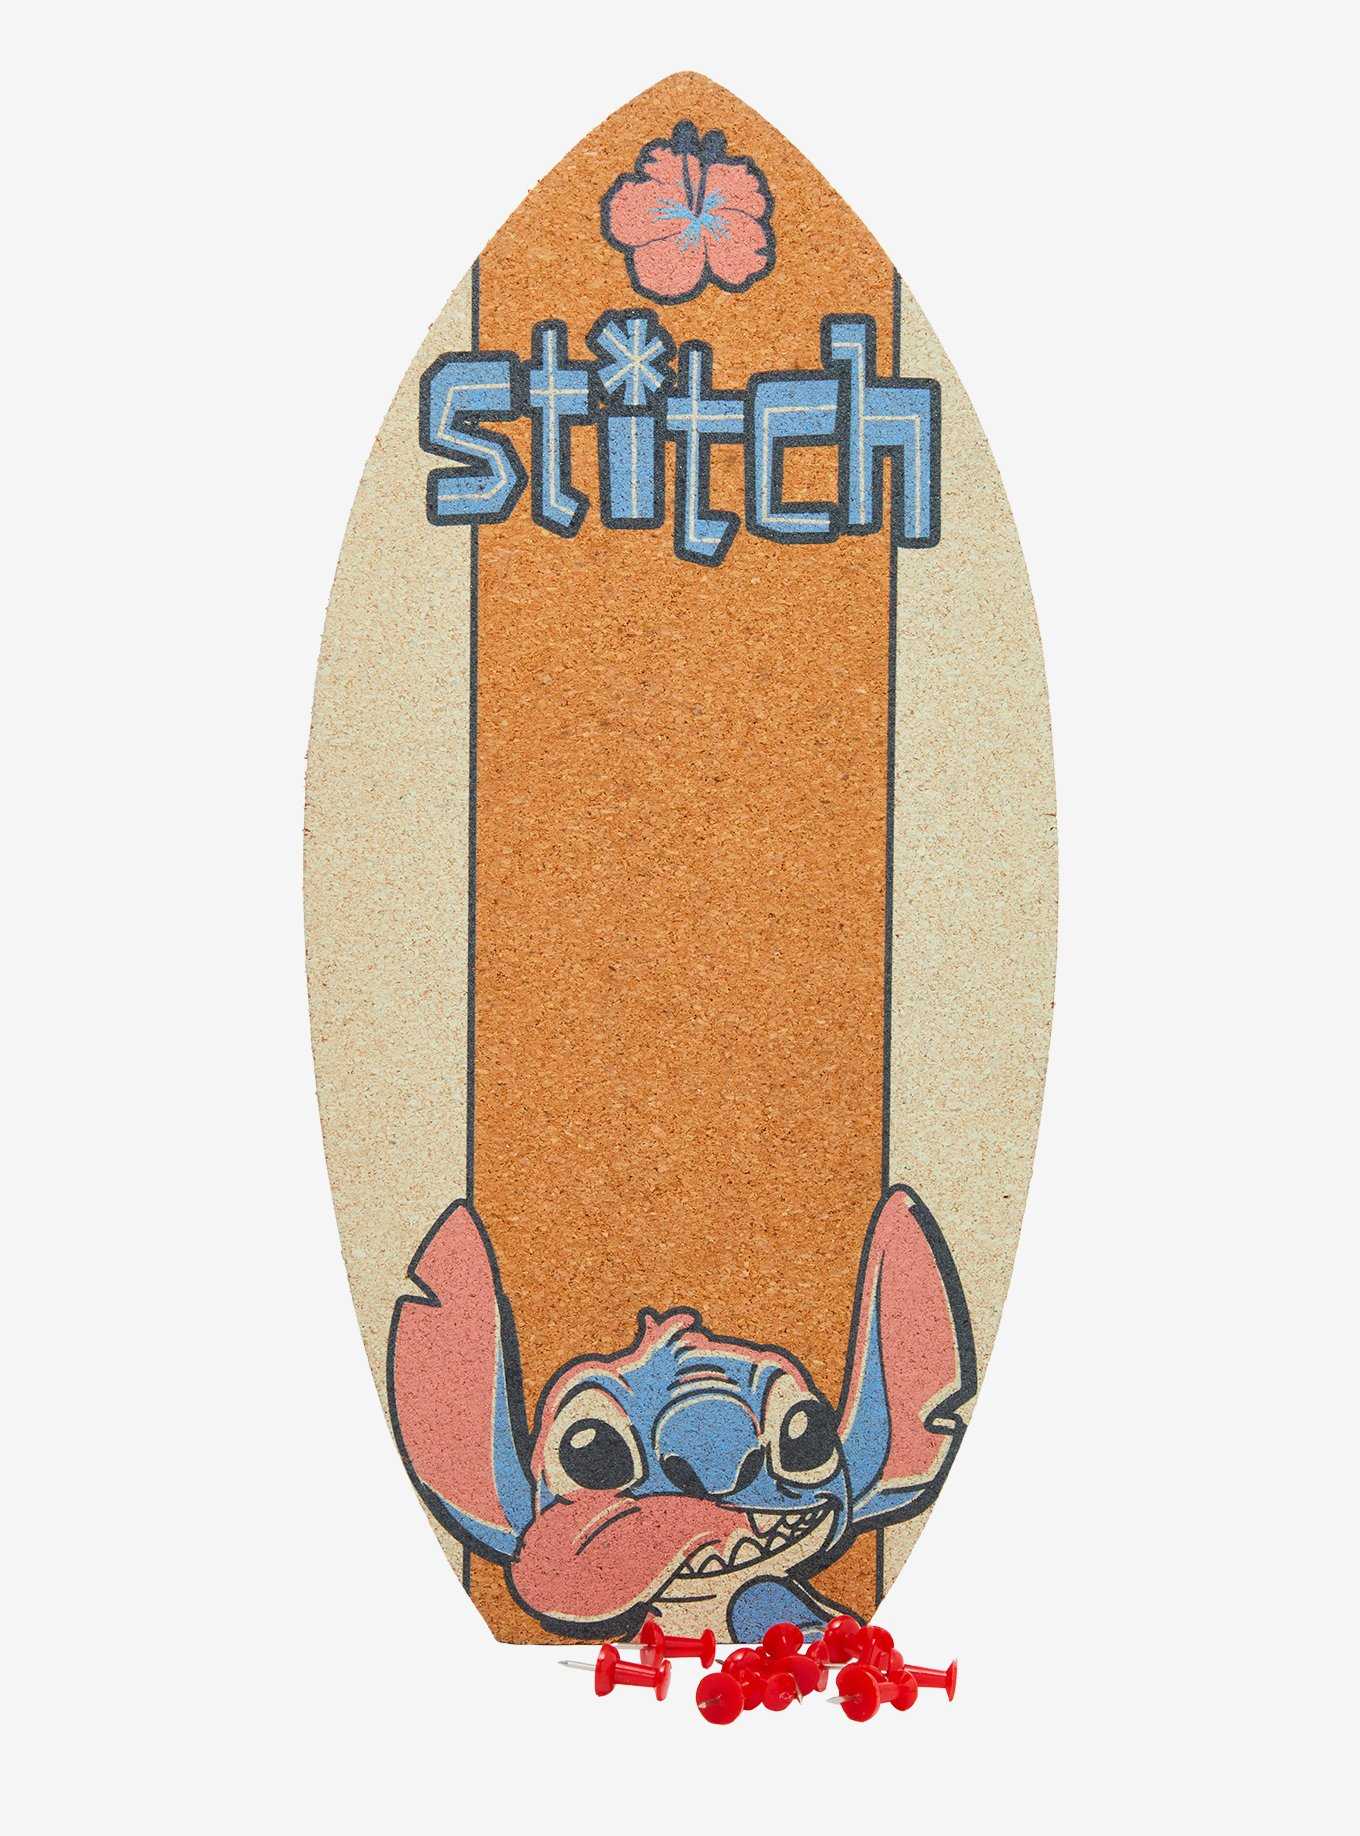 Disney Lilo & Stitch Surfboard Corkboard, , hi-res